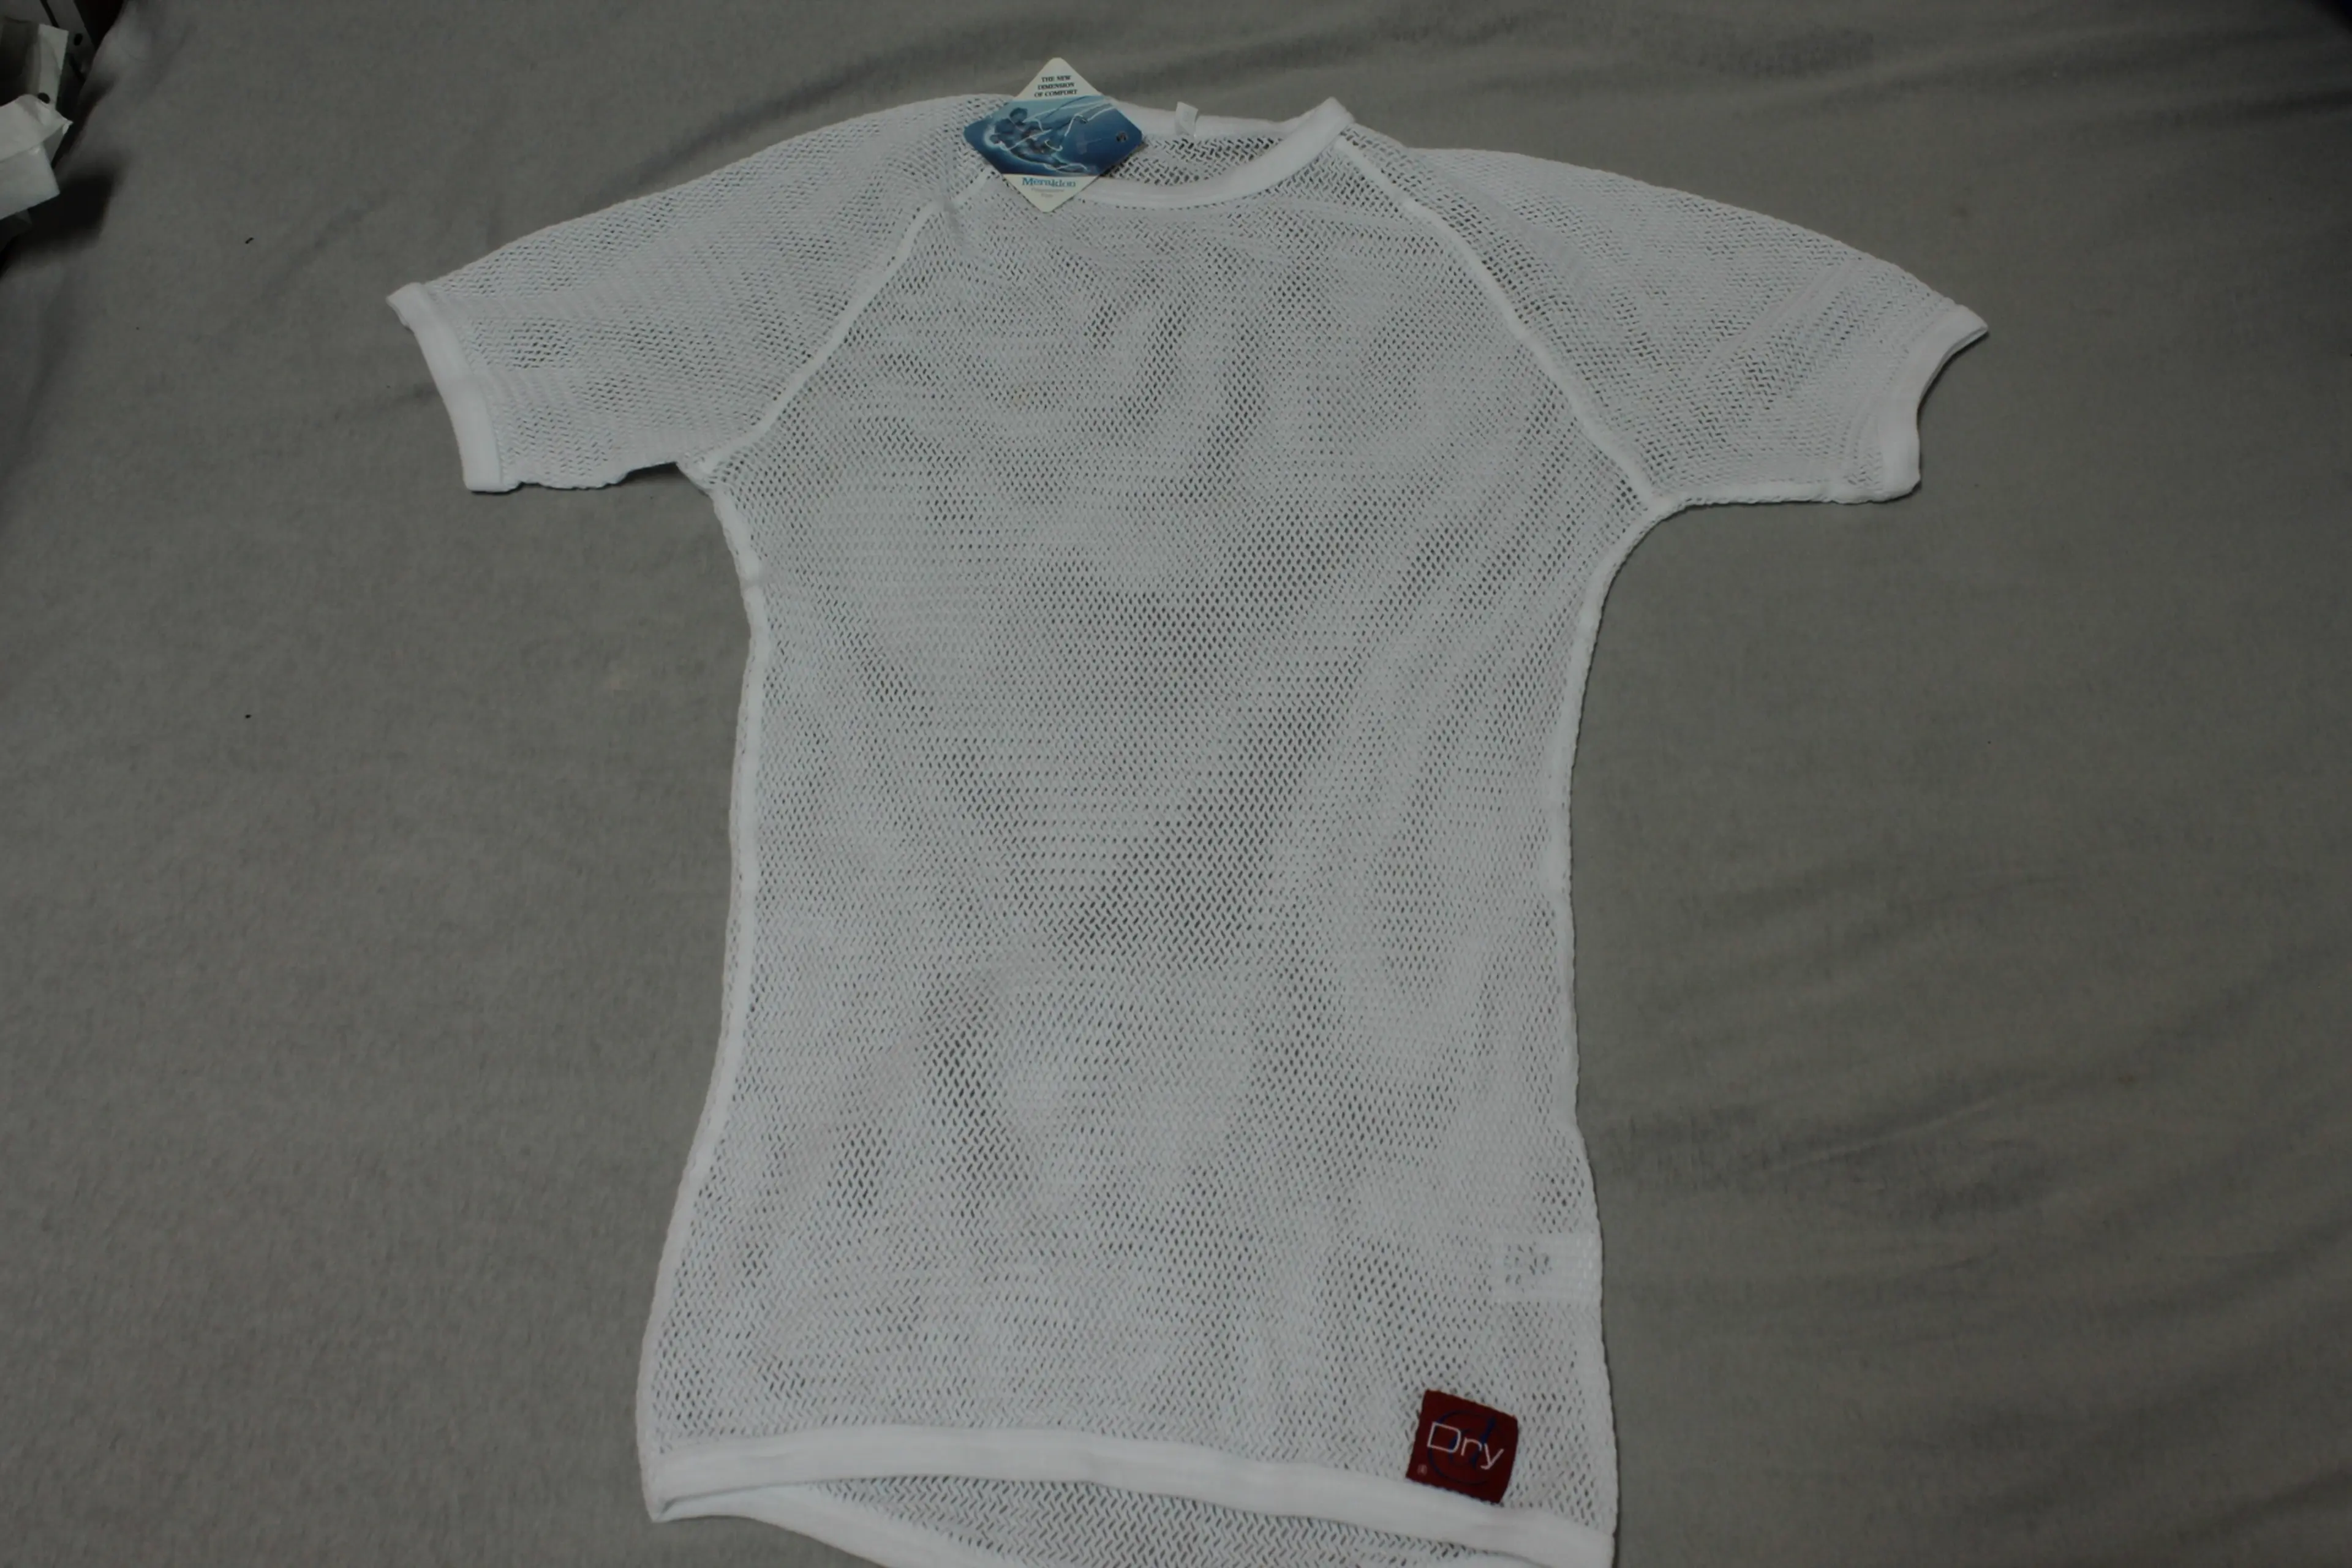 1. Tricou Dry Meraklon tricou cu plasa NOU marimi: S, L, XL